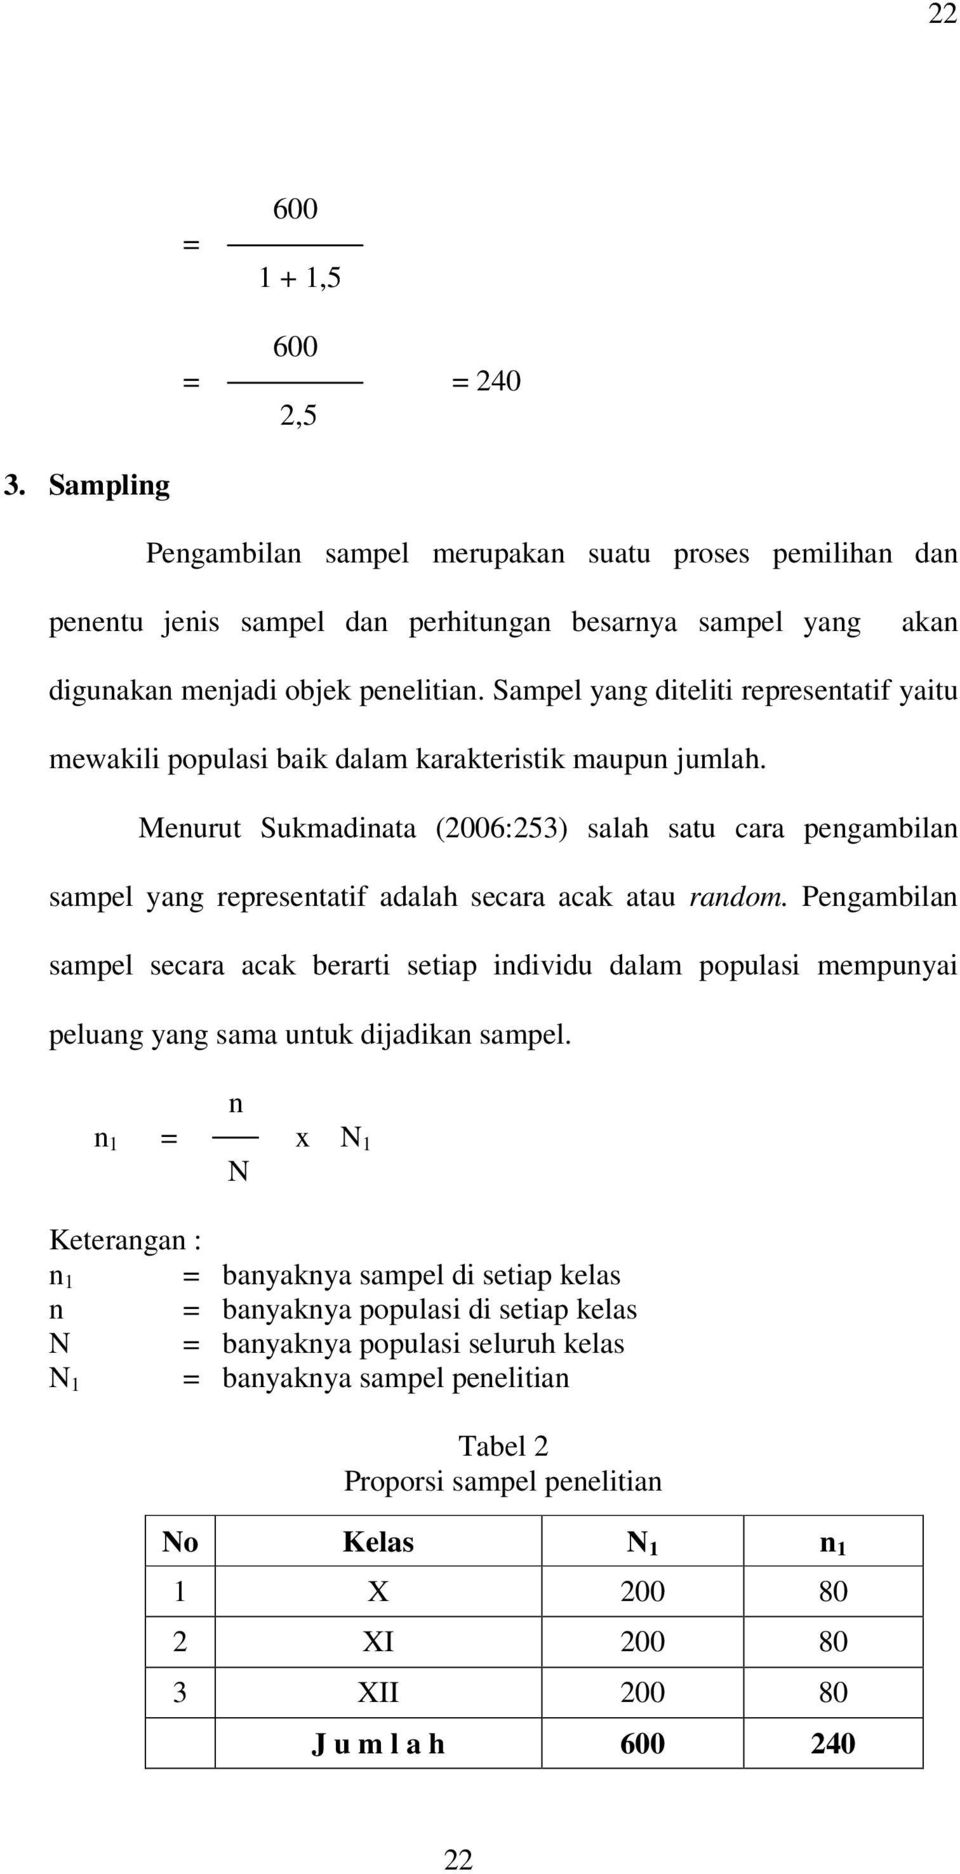 Menurut Sukmadinata (2006:253) salah satu cara pengambilan sampel yang representatif adalah secara acak atau random.